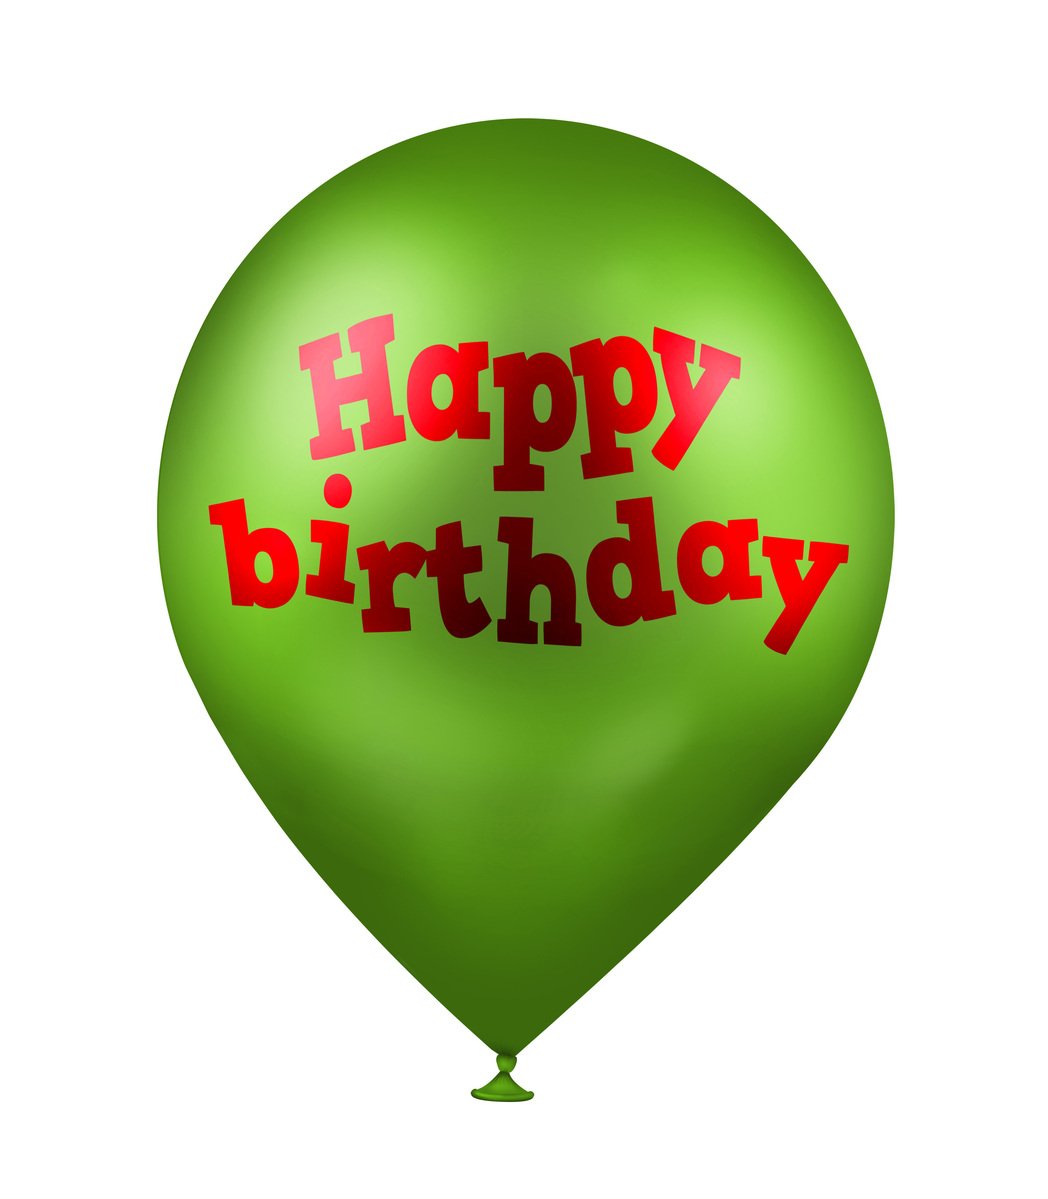 happy birthday message on a green balloon